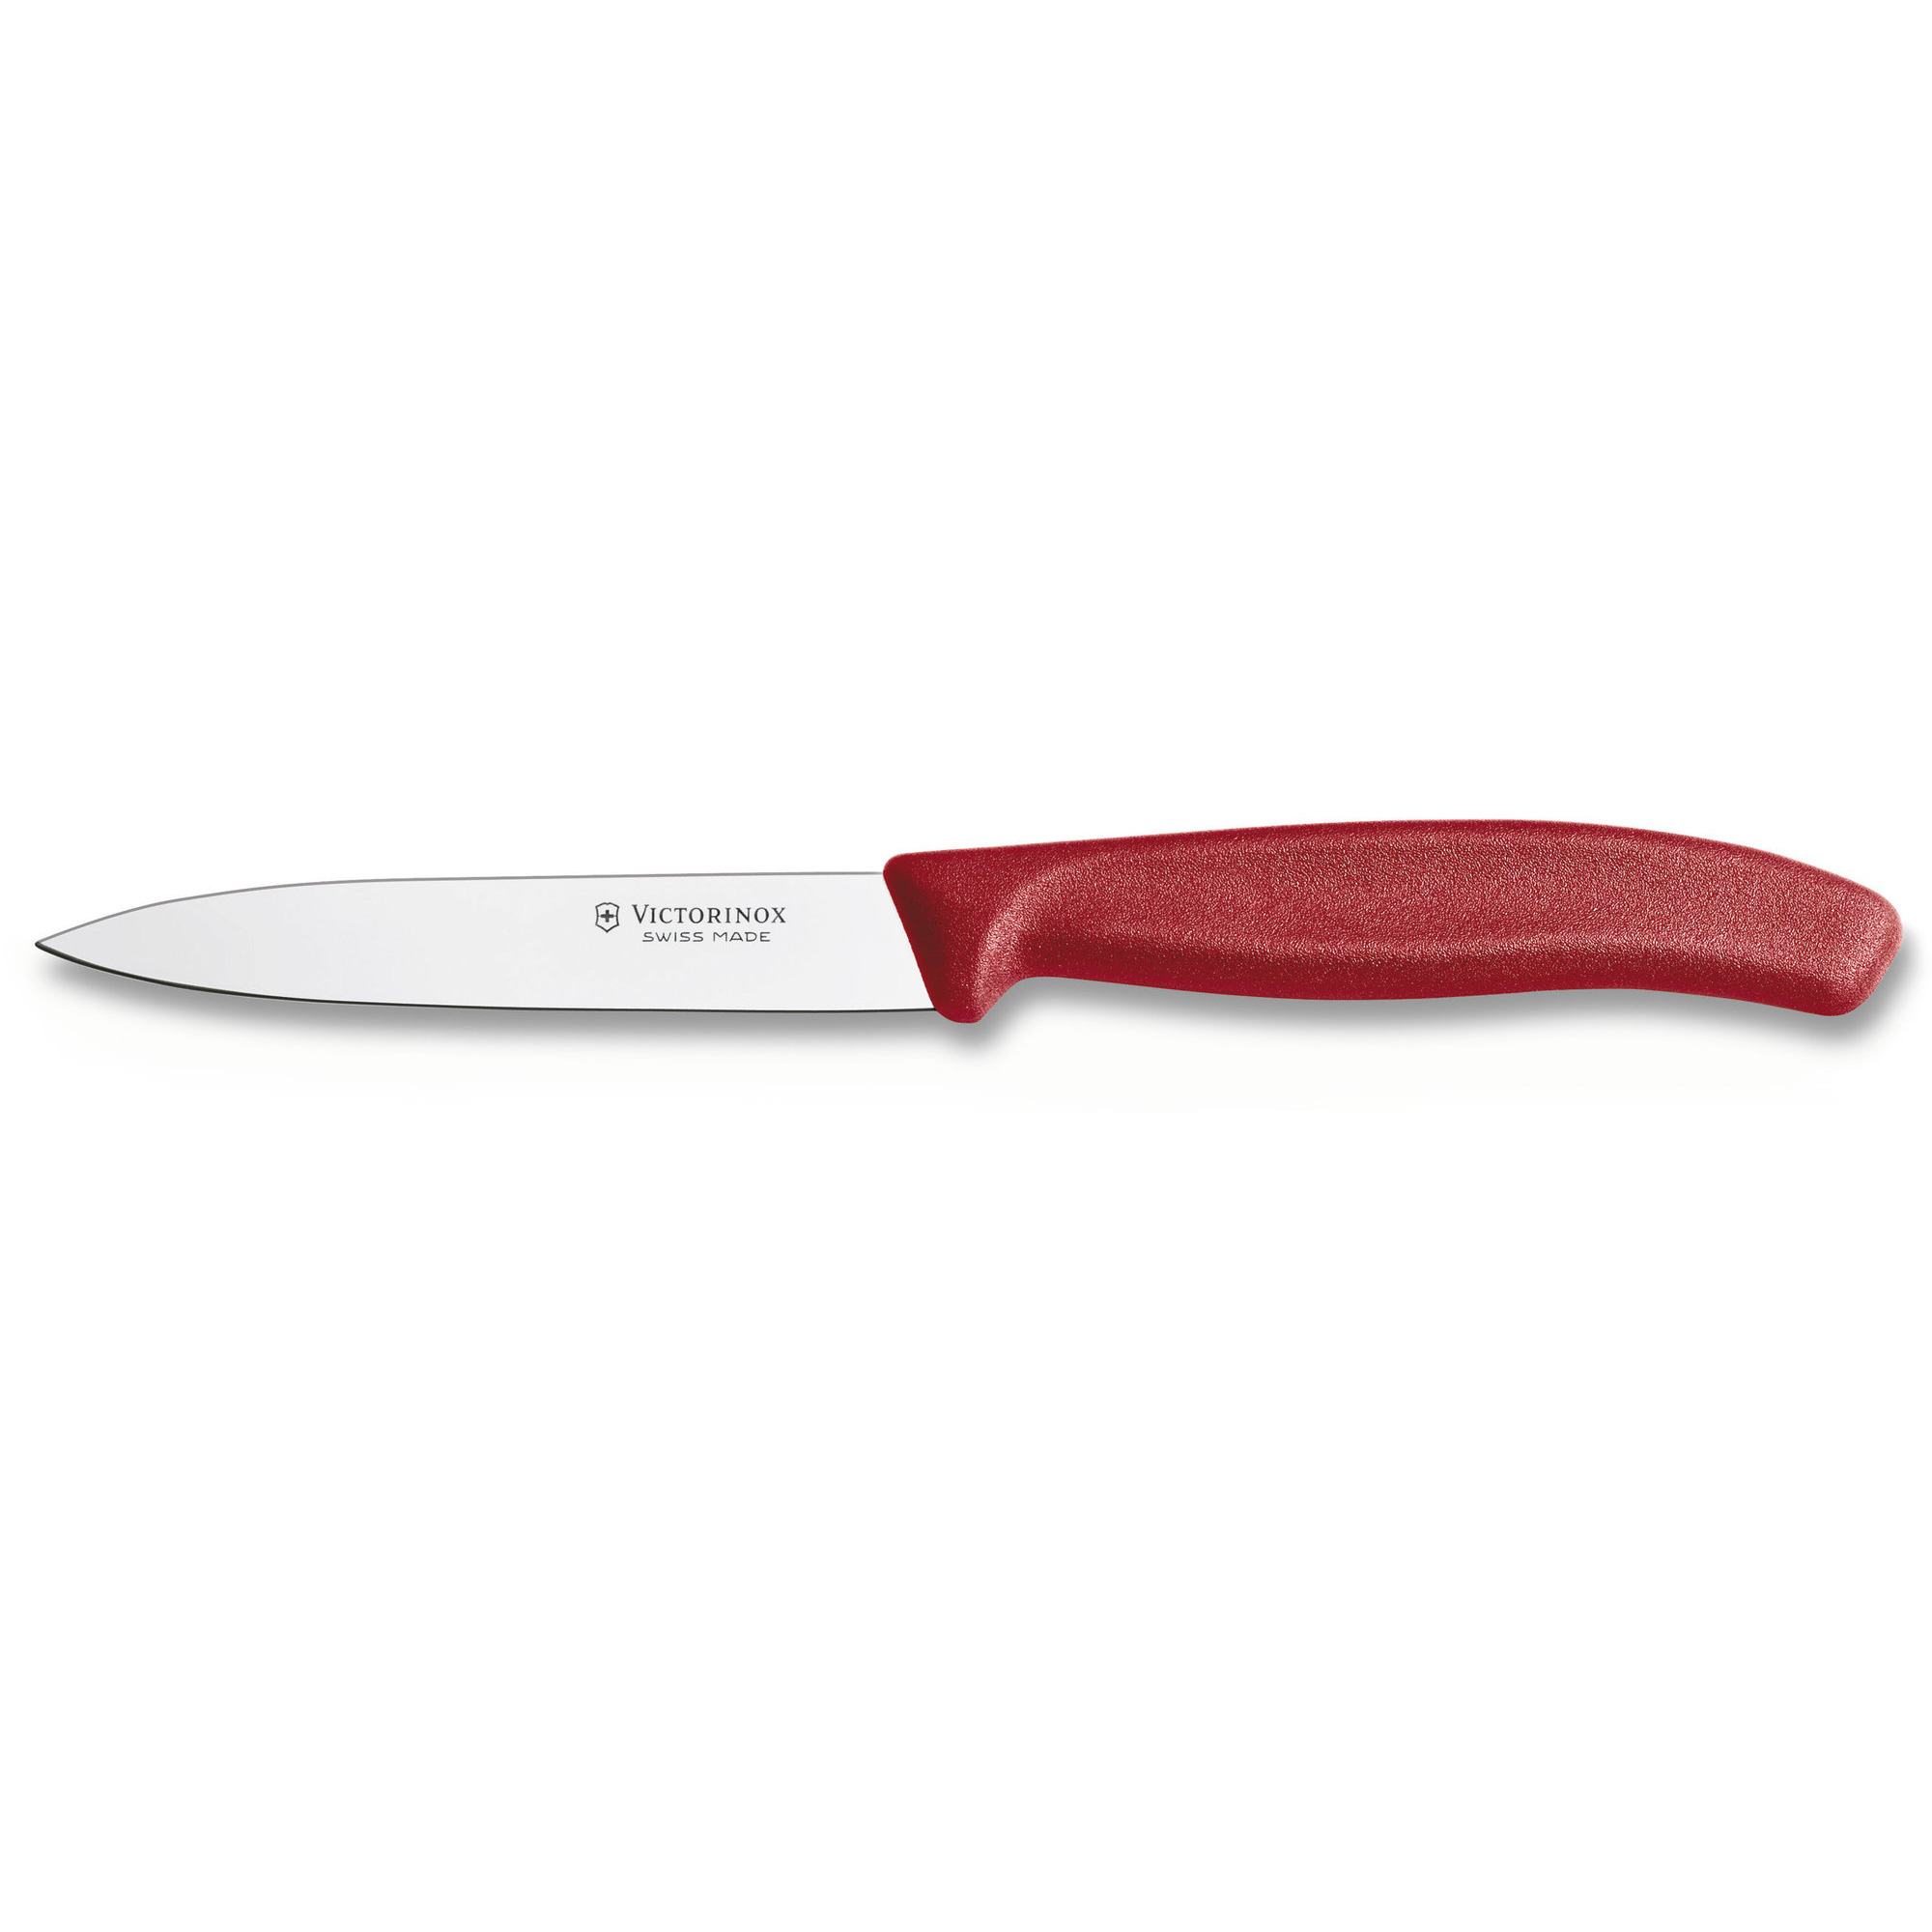 Victorinox Grøntsags- og skrællekniv med nylonhåndtag i rød, 10 cm.